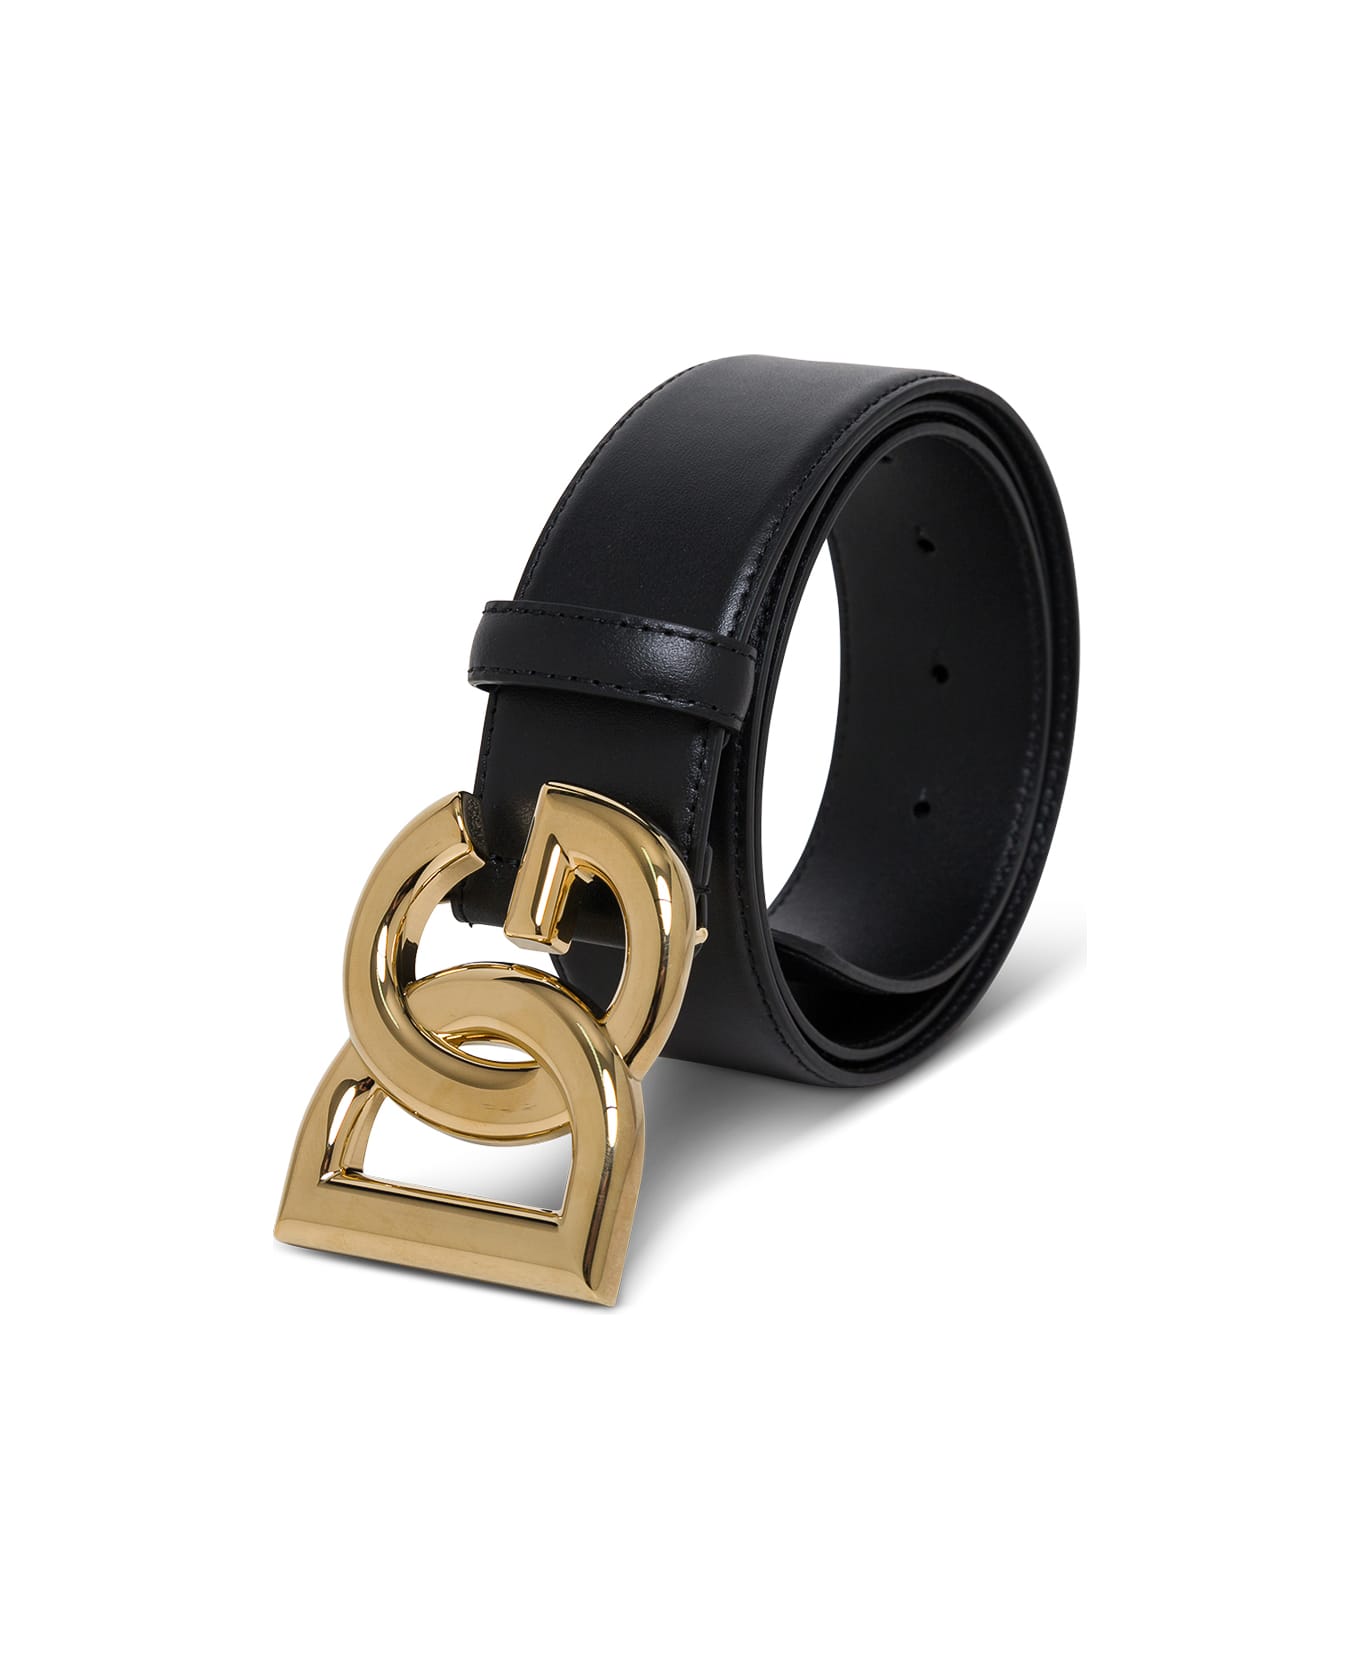 Dolce & Gabbana Woman 's Black Leather Belt With Logo Buckle - Black